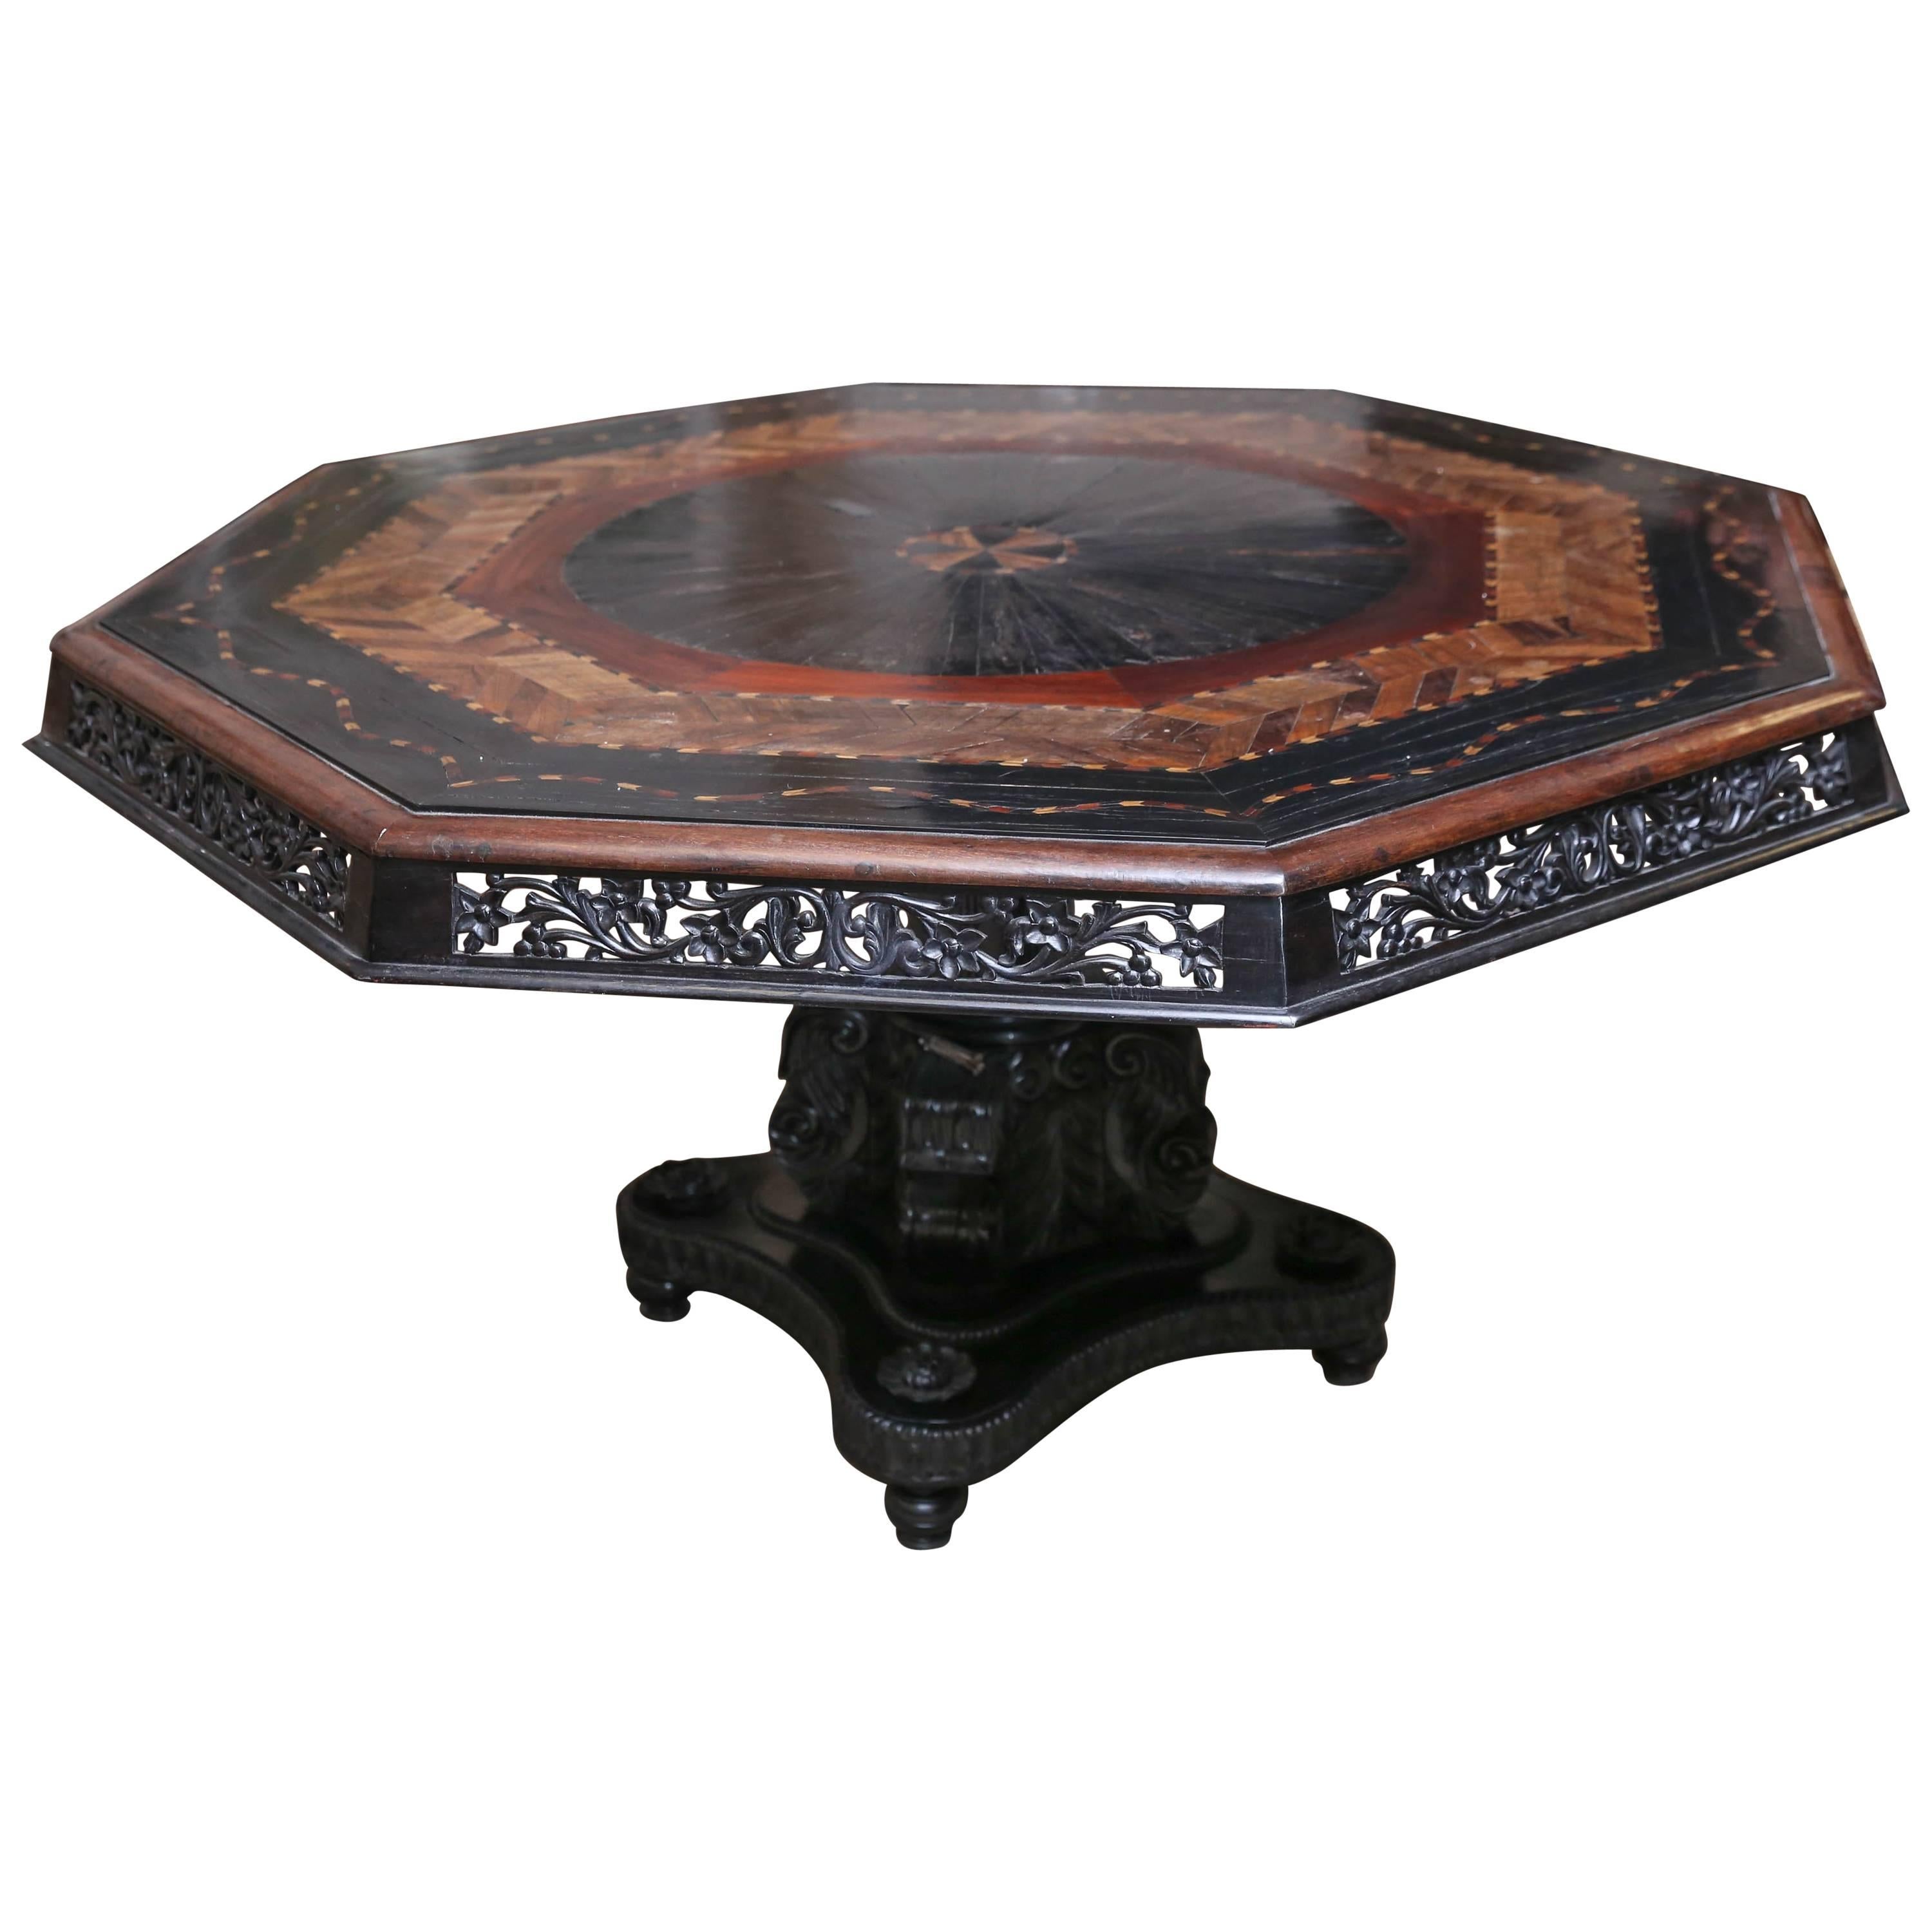 Extraordinary 1850s Solid Ebony Hexagonal Specimen Wood Table from Sri Lanka For Sale